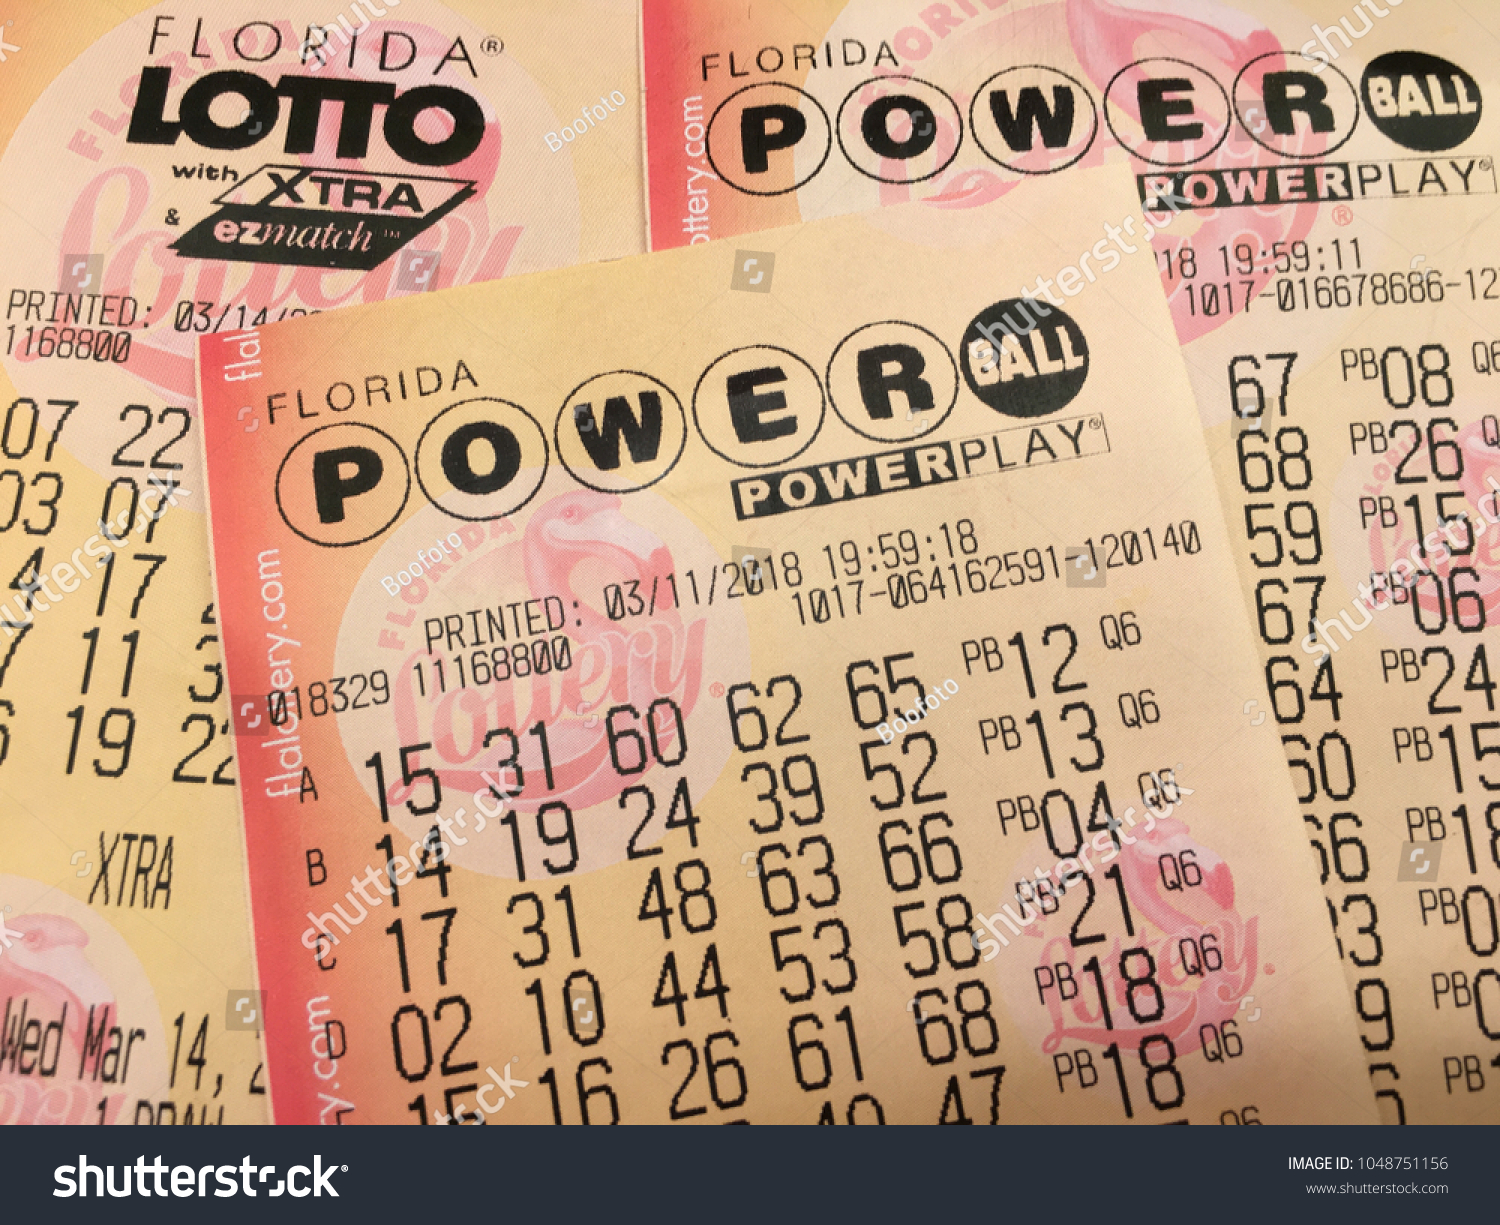 lotto ticket powerball